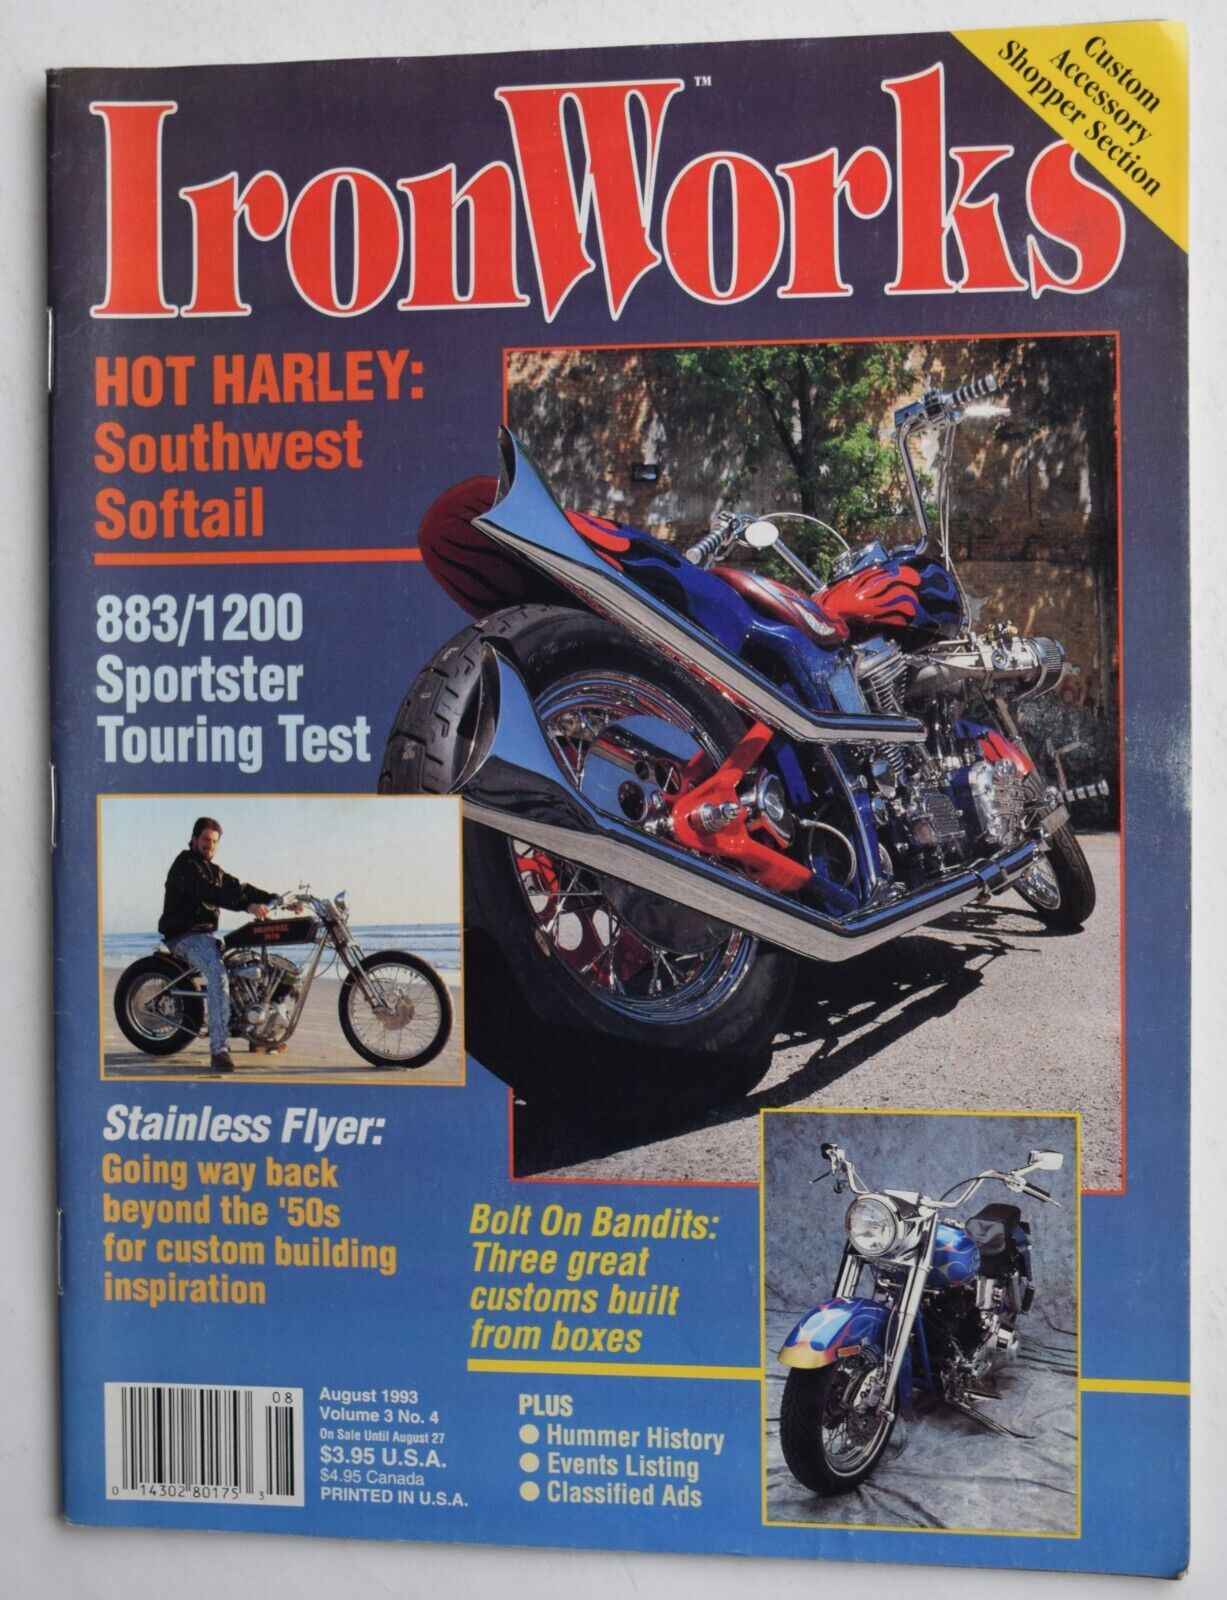 Ironworks Magazine - August 1993 - 883/1200 Sportster Touring Test